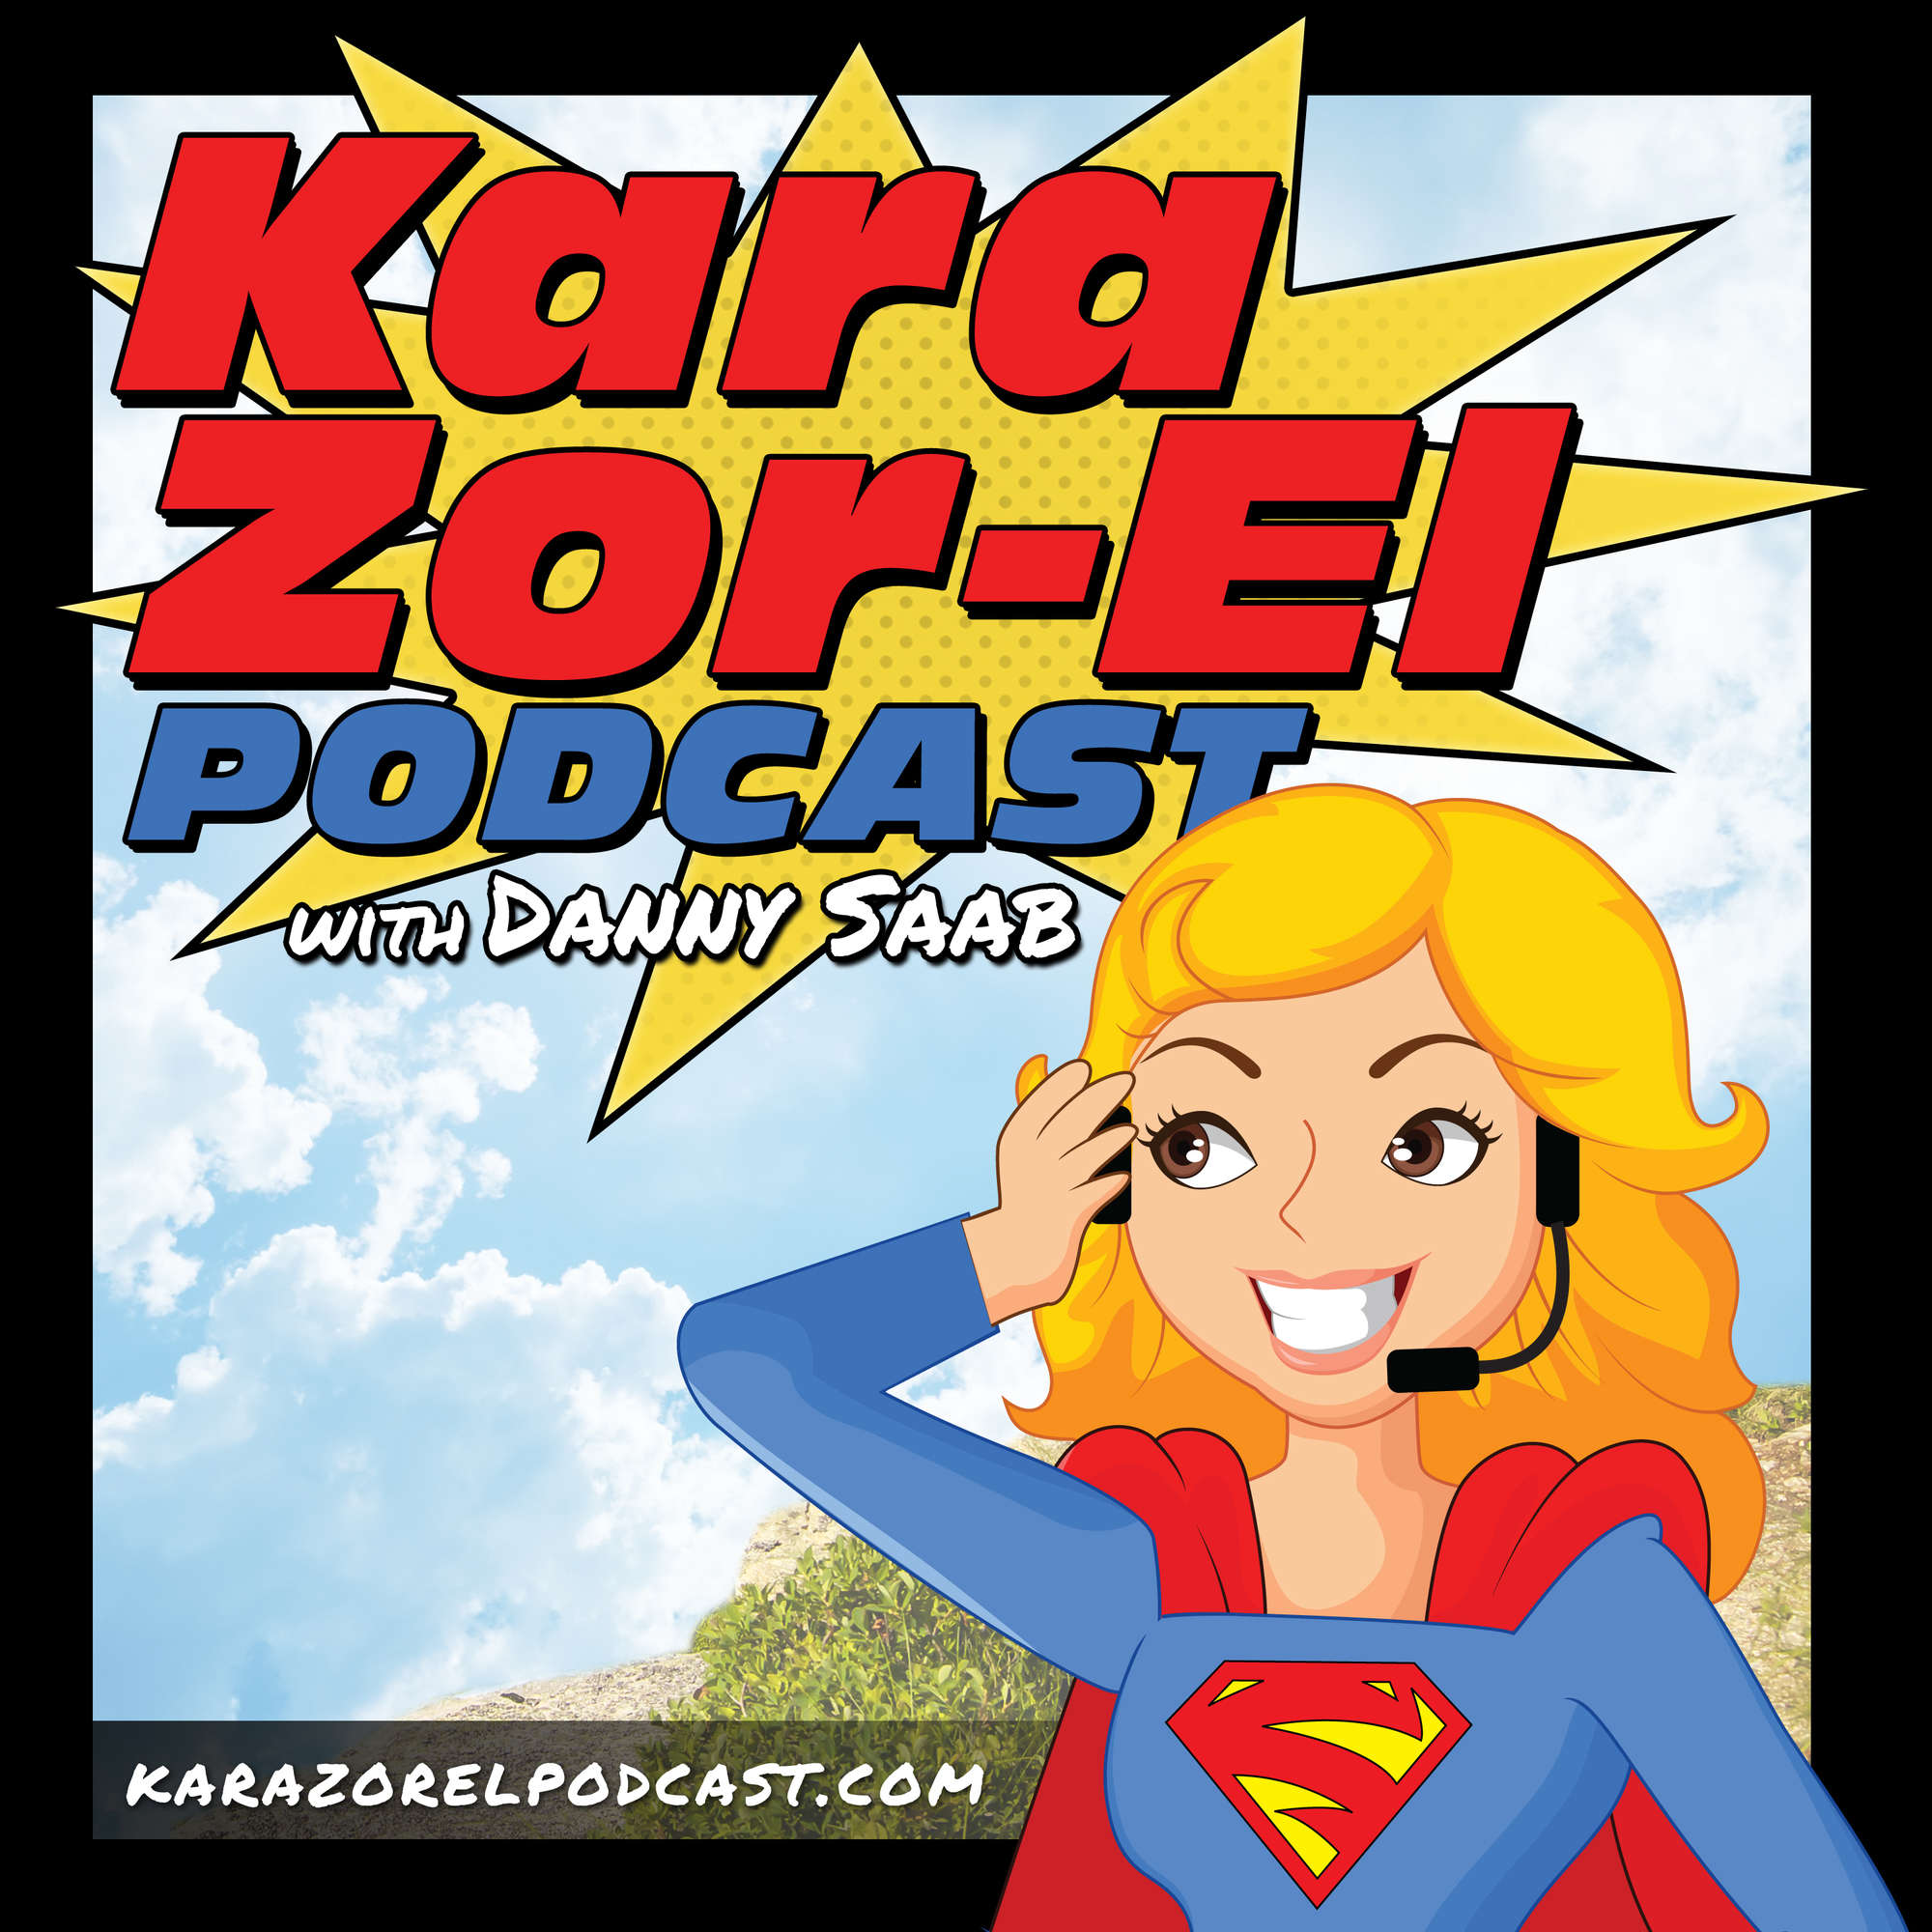 Kara Zor-El Podcast